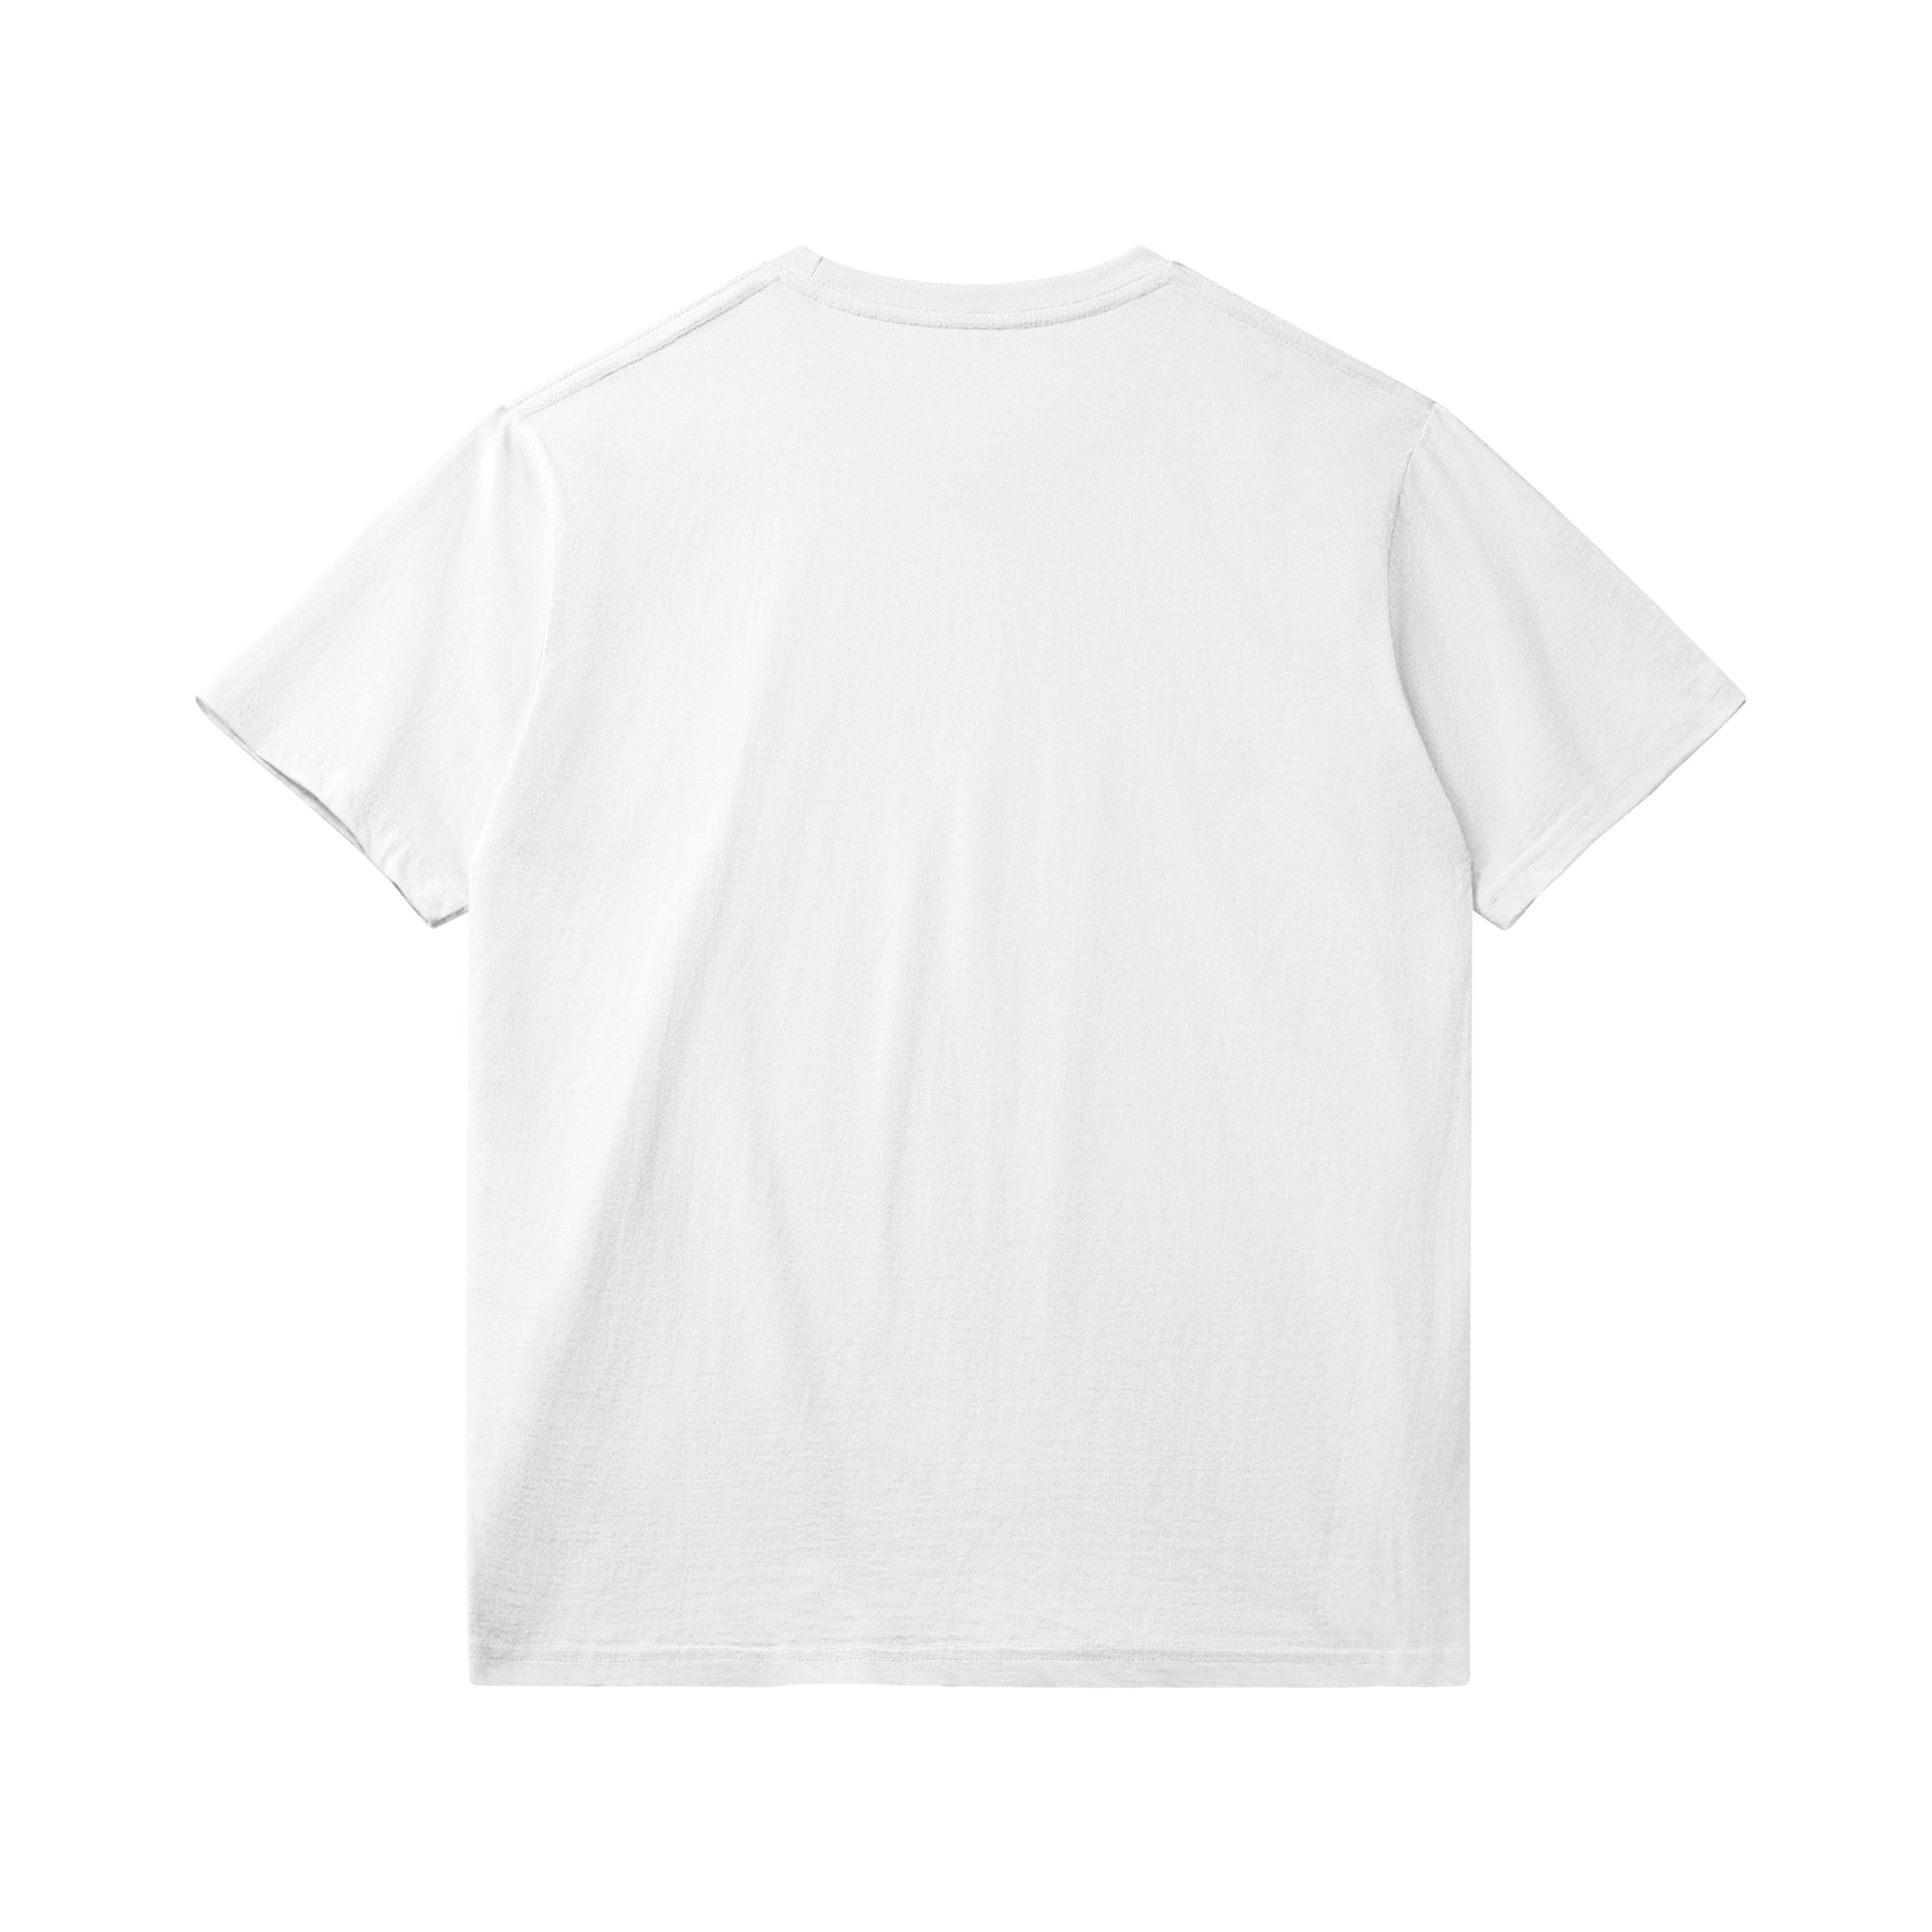 PSY EYE (BACK PRINT) -  Unisex Lightweight Classic T-shirt